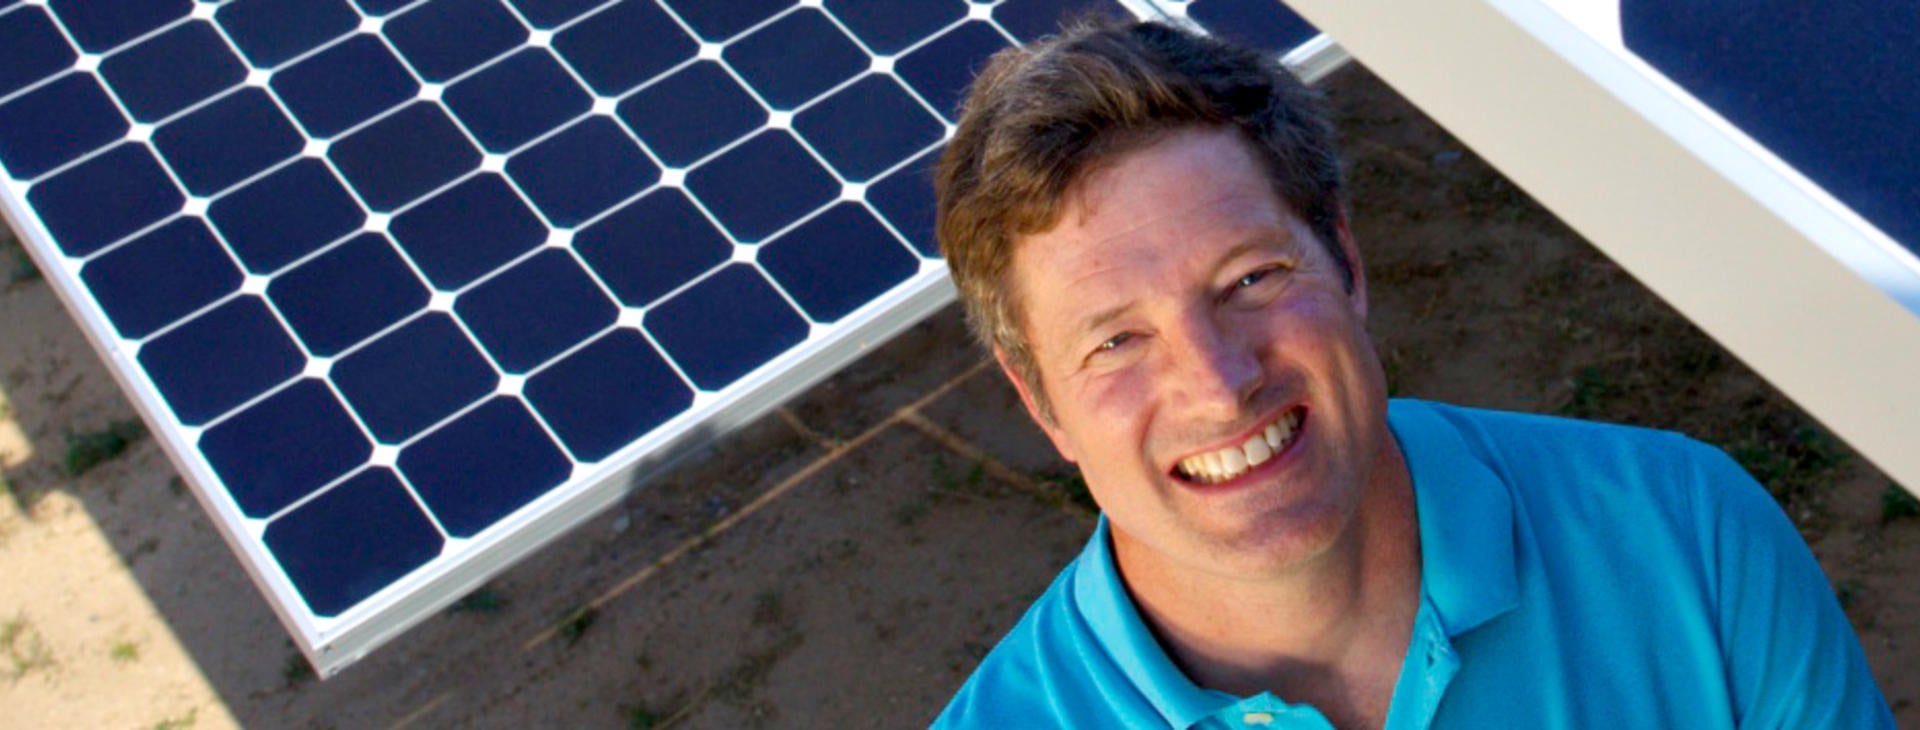 Chris @ UCR Solar Field